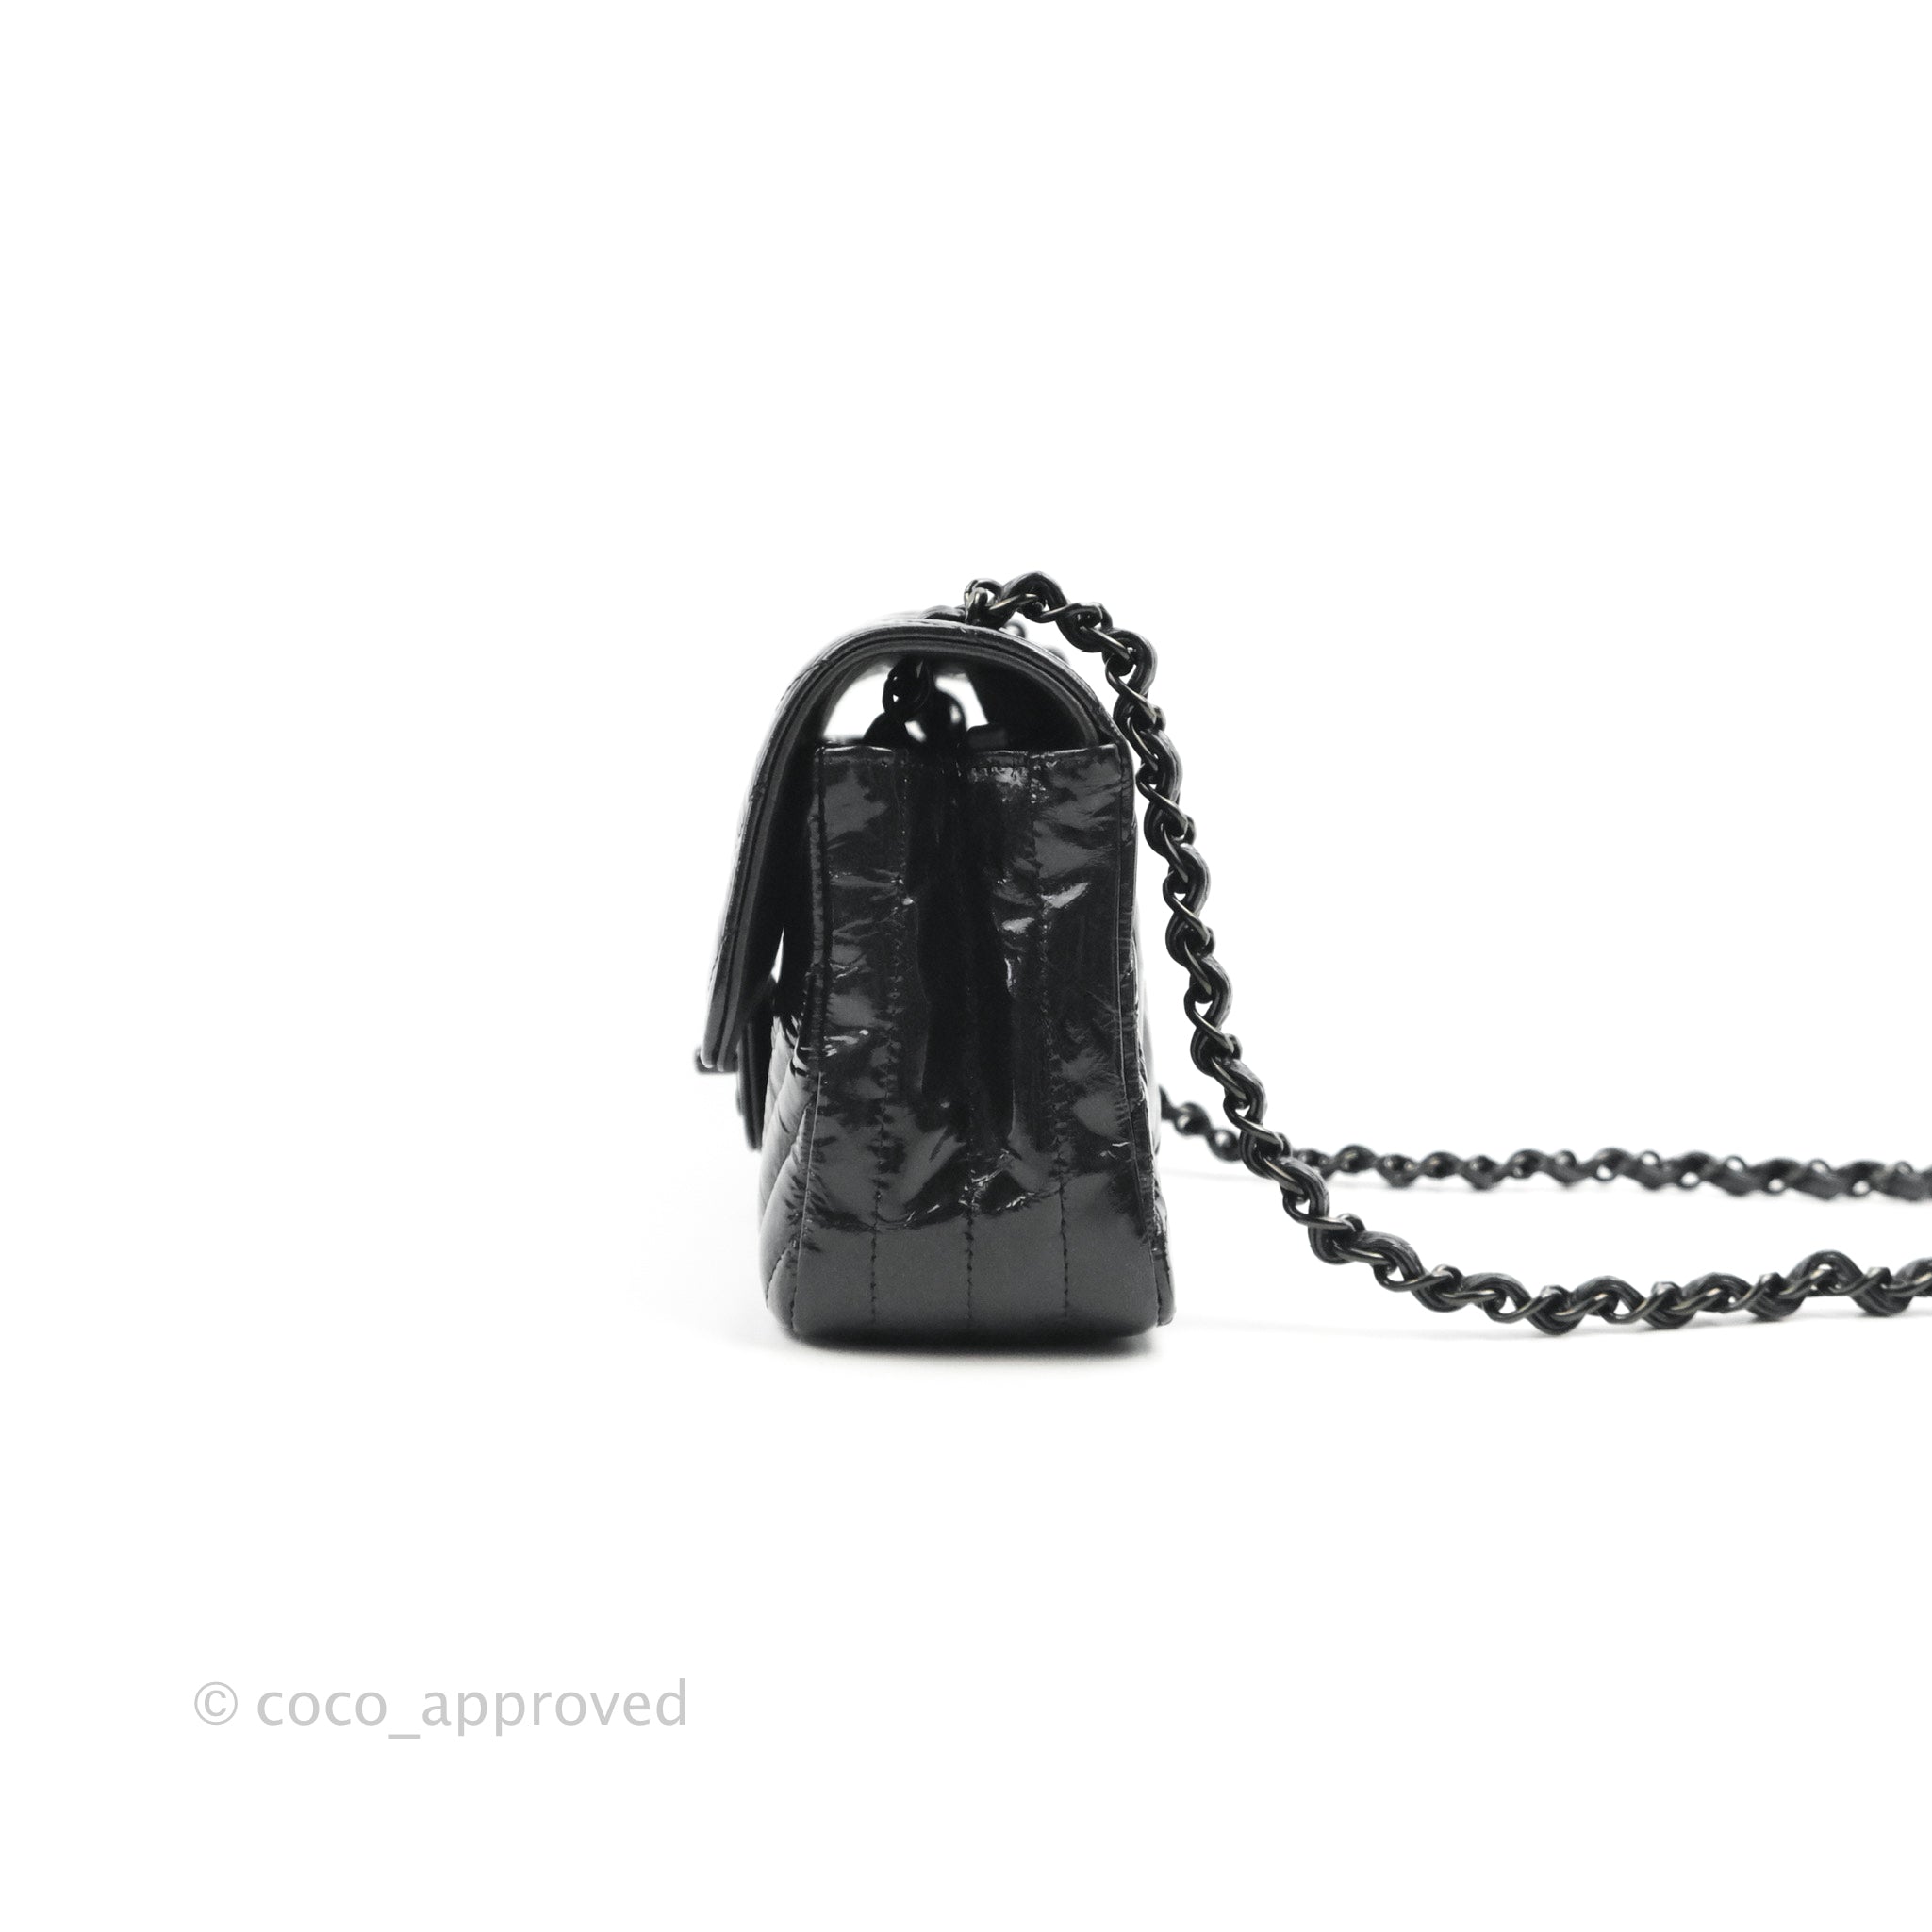 Chanel SO Black Metallic Patent Leather Chevron Quilted Mini